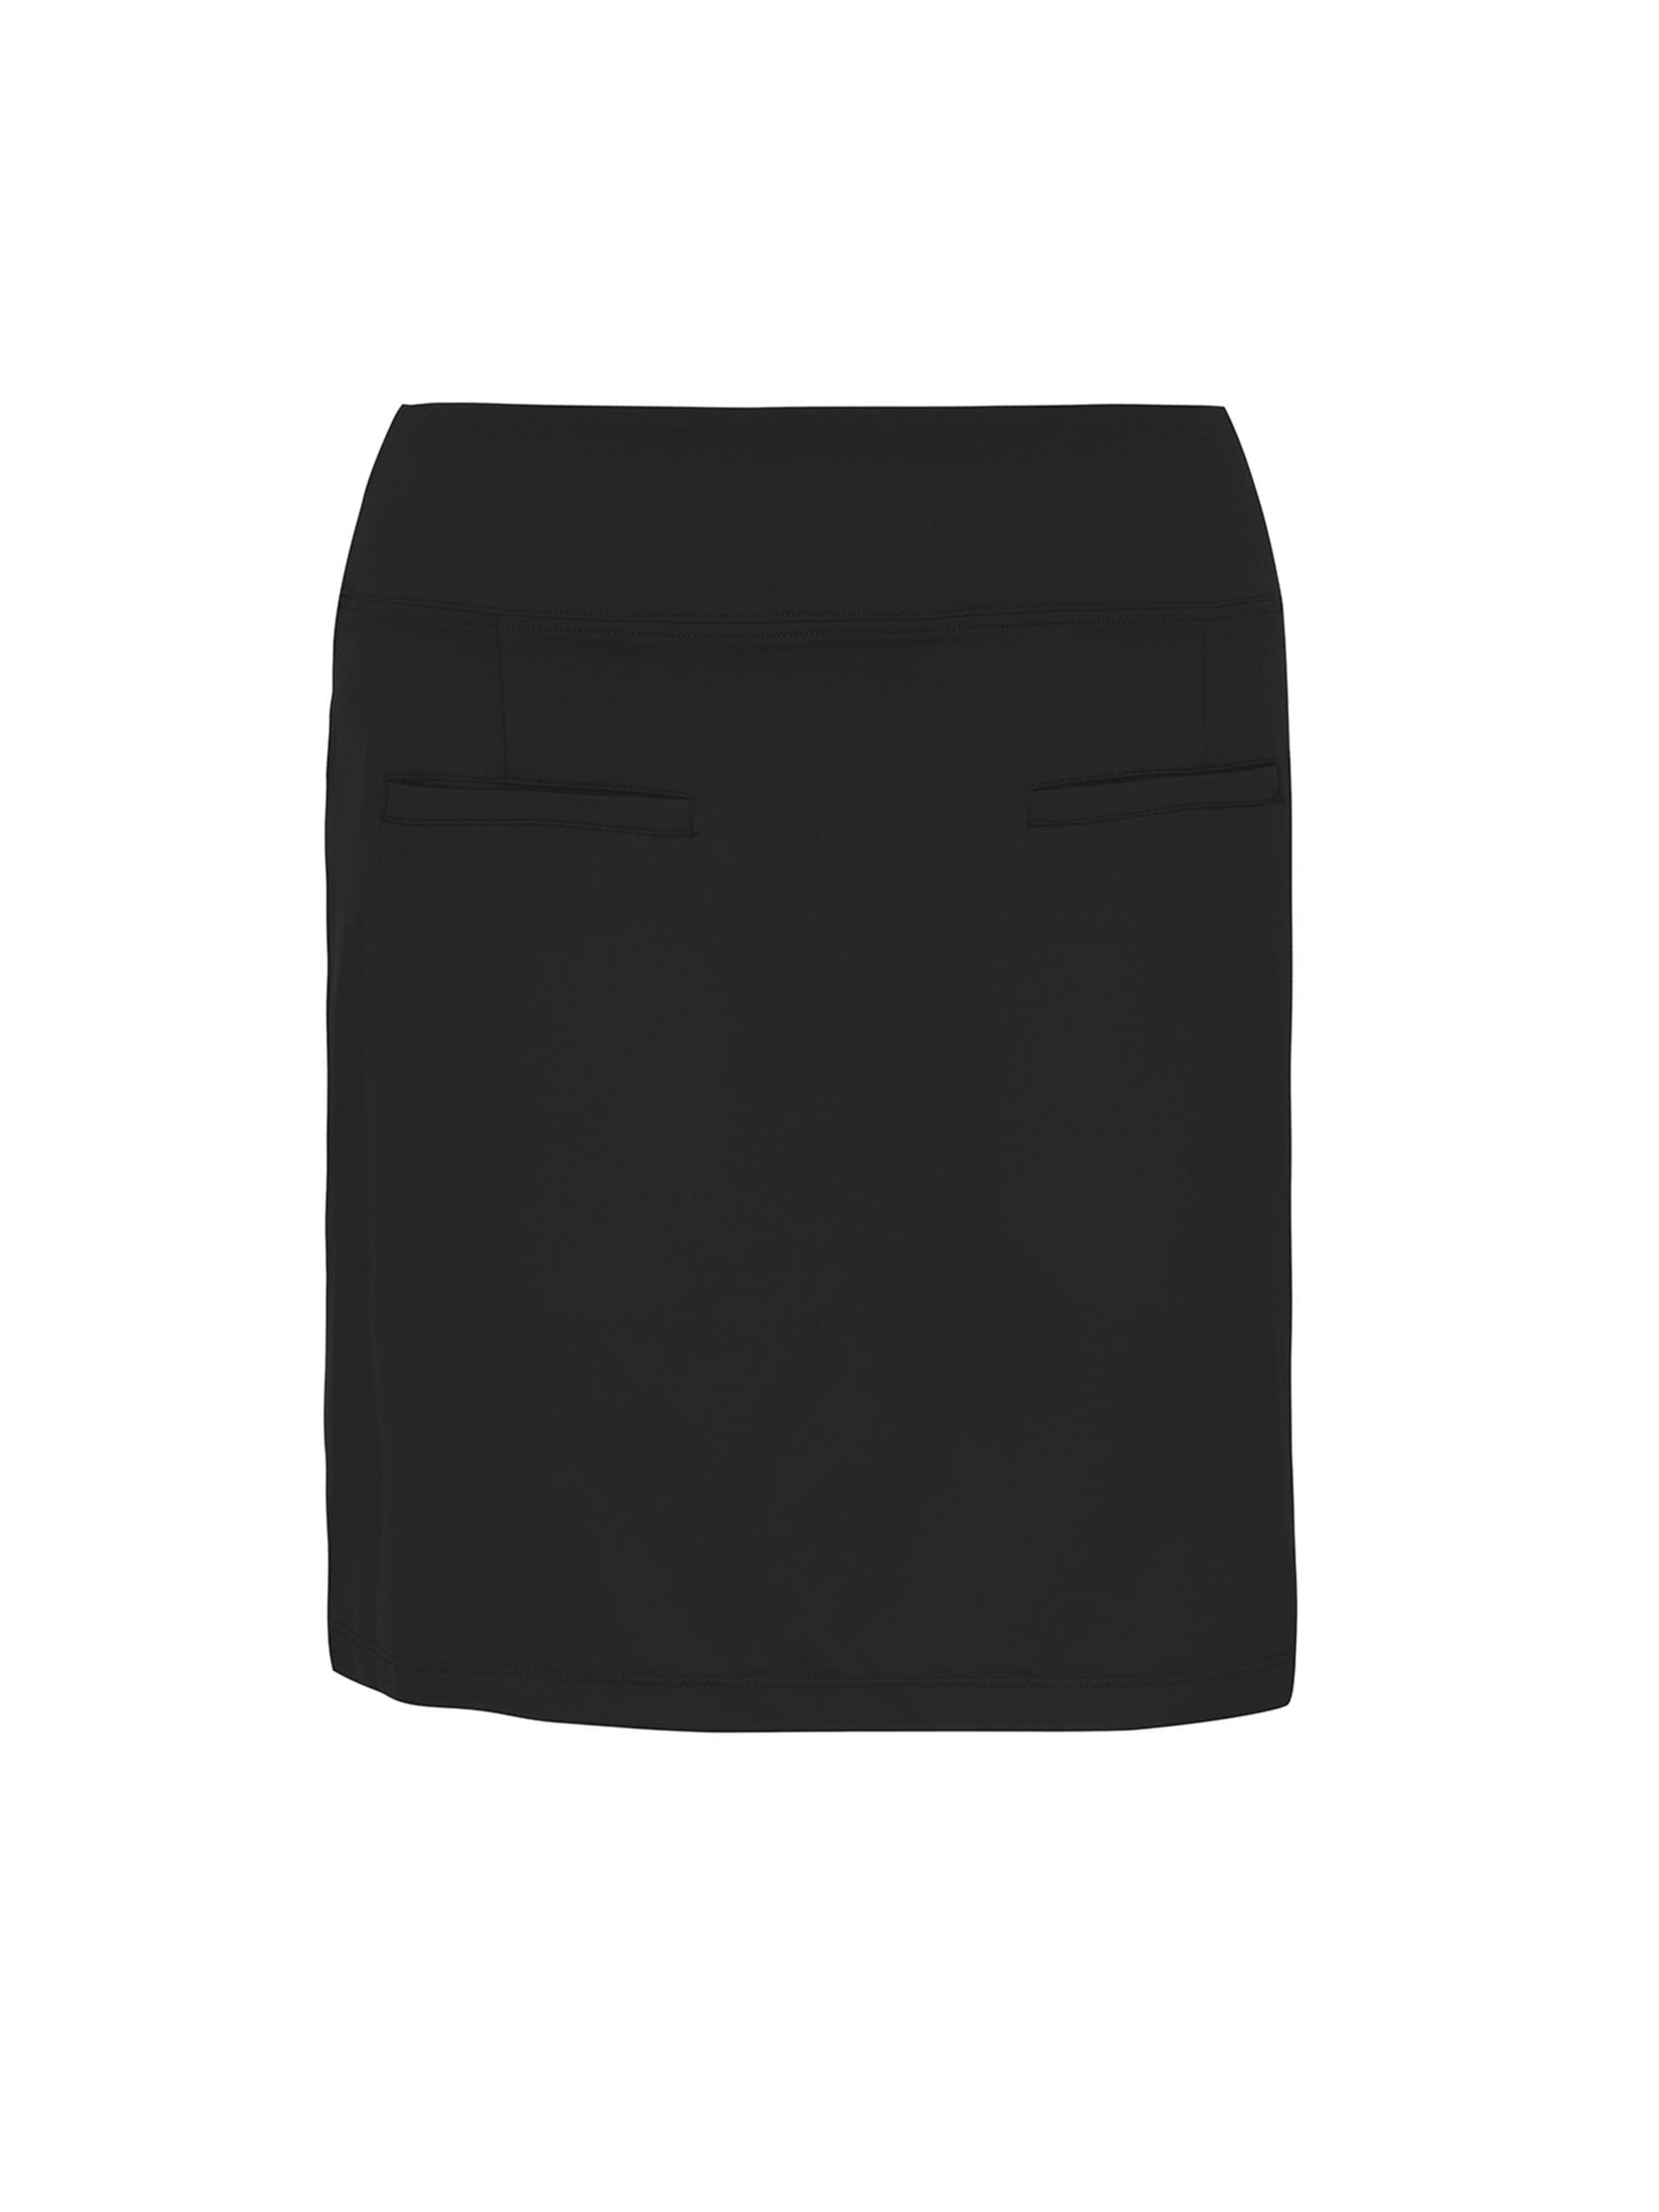 Dolcezza culotte skirt 34502-BLACK